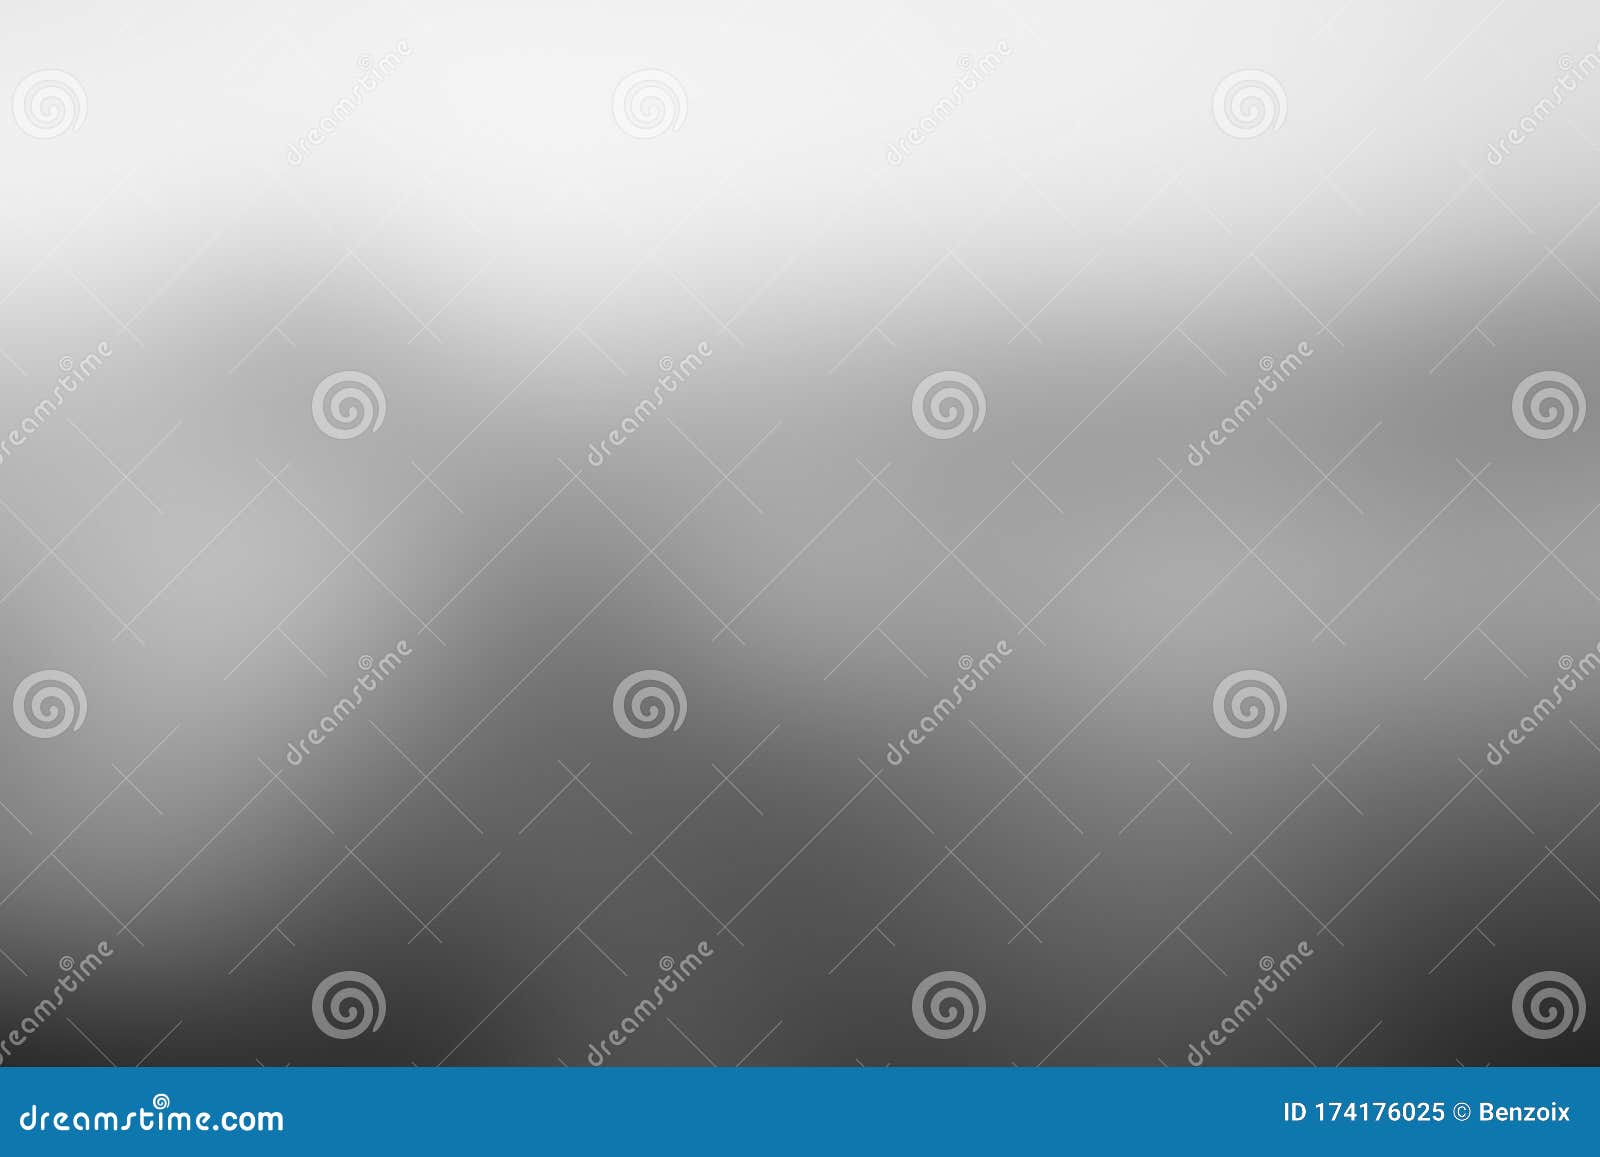 wallpaper for desktop, laptop | sf60-dark-under-sea-blue-gradation-blur